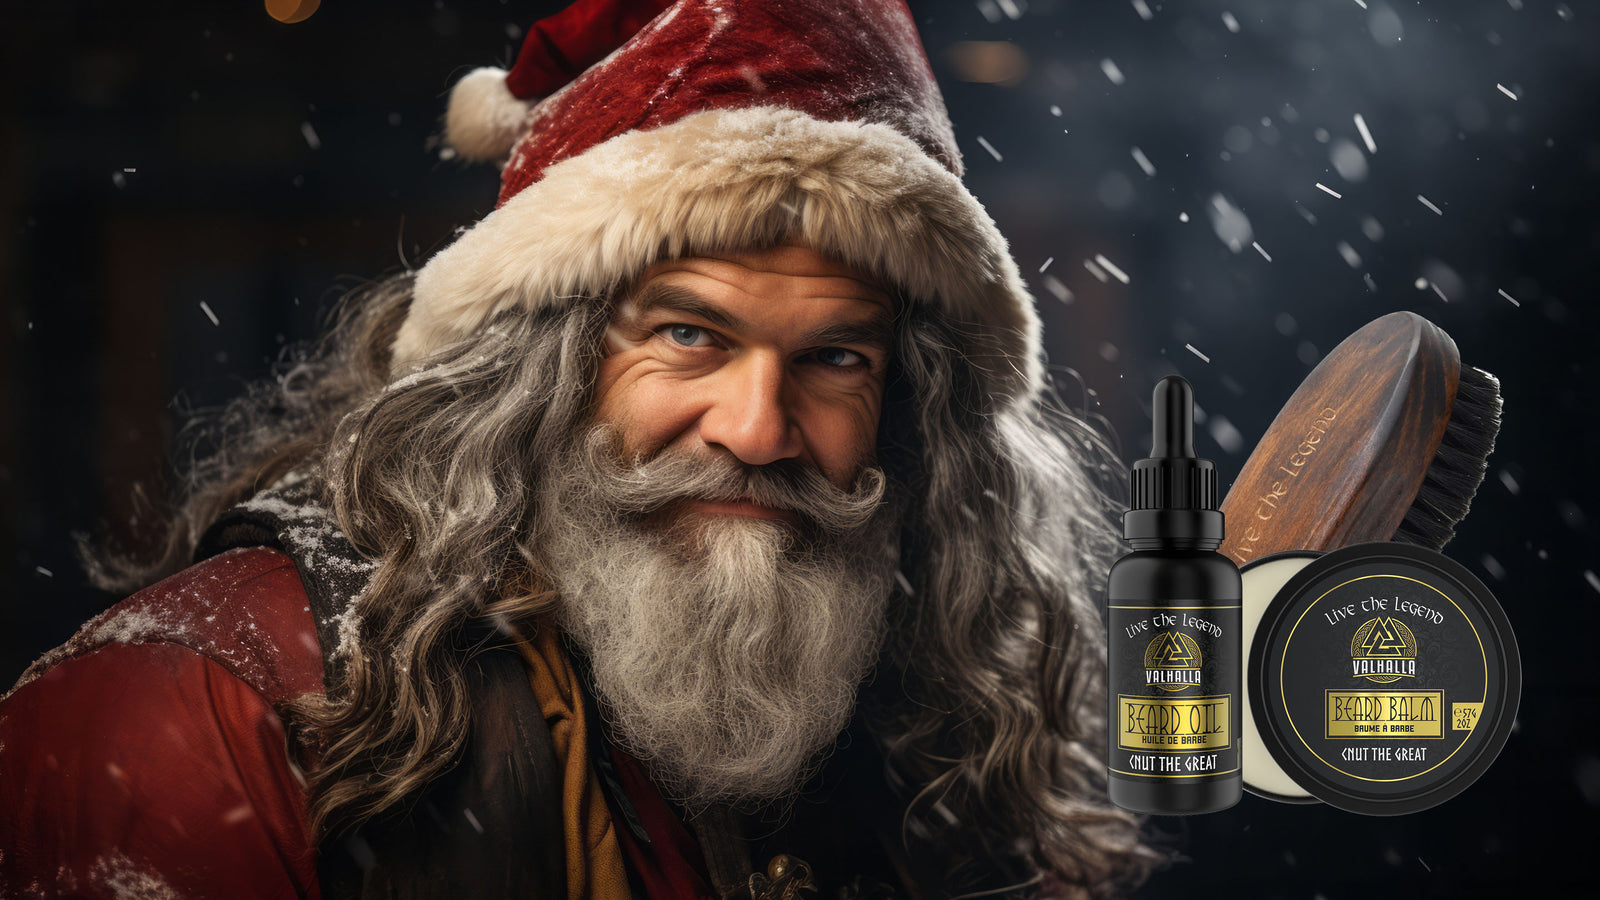 Viking Santa Claus with a beard care kit, Beard Oil, Beard Balm, Boar Brush - The perfect gift this holiday season